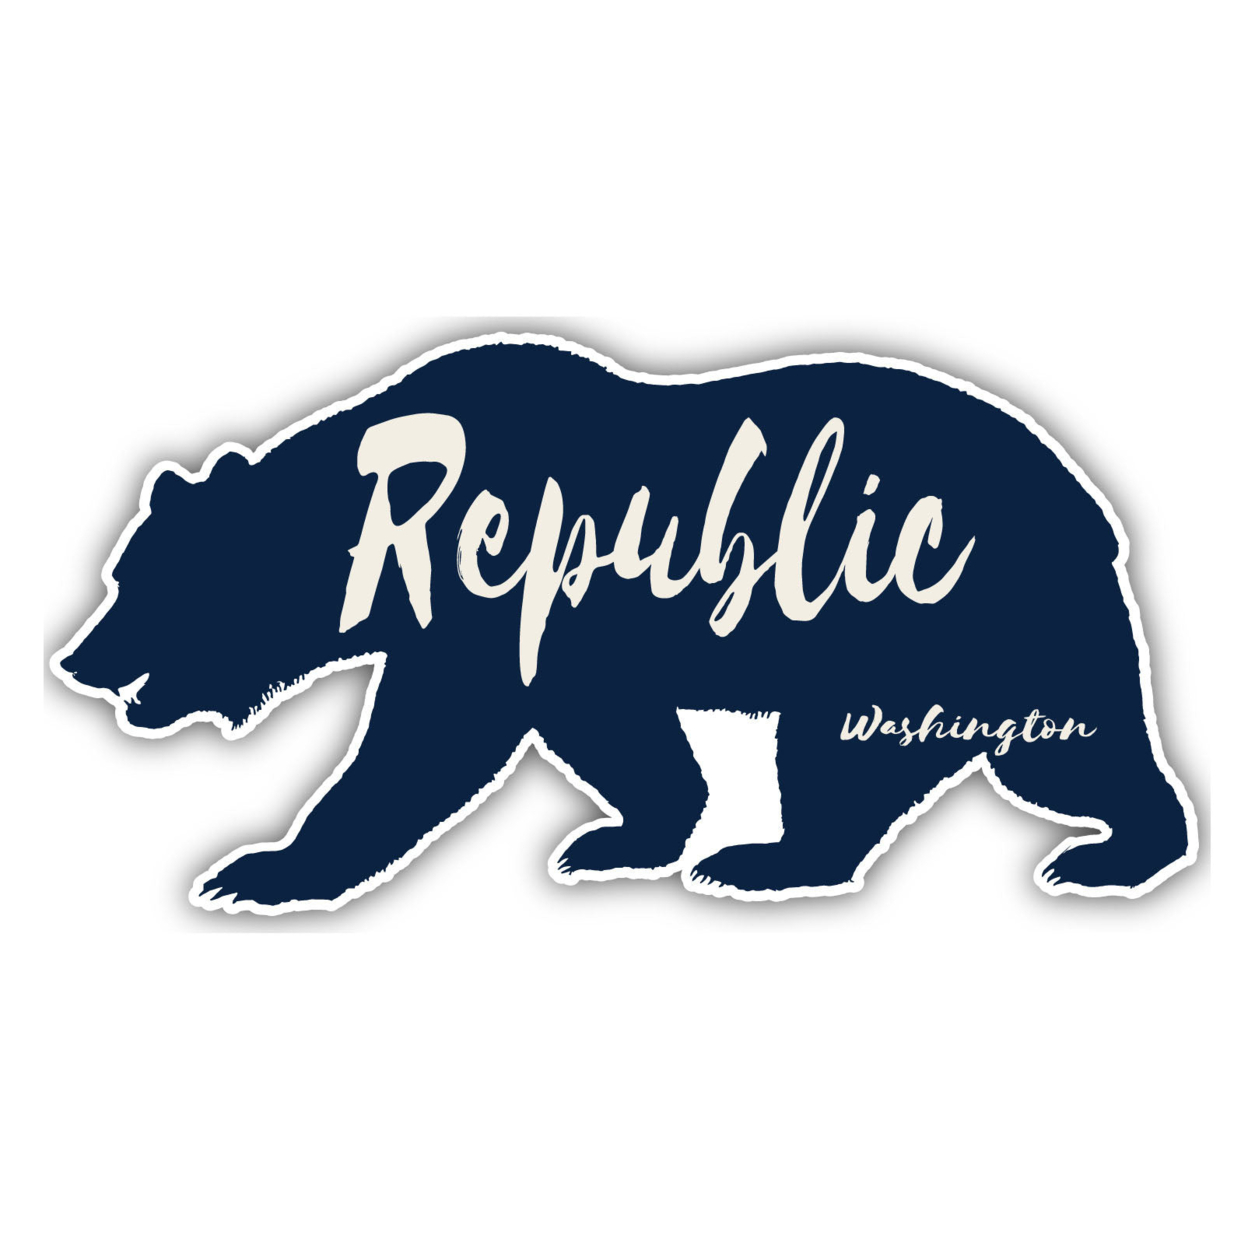 Republic Washington Souvenir Decorative Stickers (Choose Theme And Size) - Single Unit, 4-Inch, Adventures Awaits